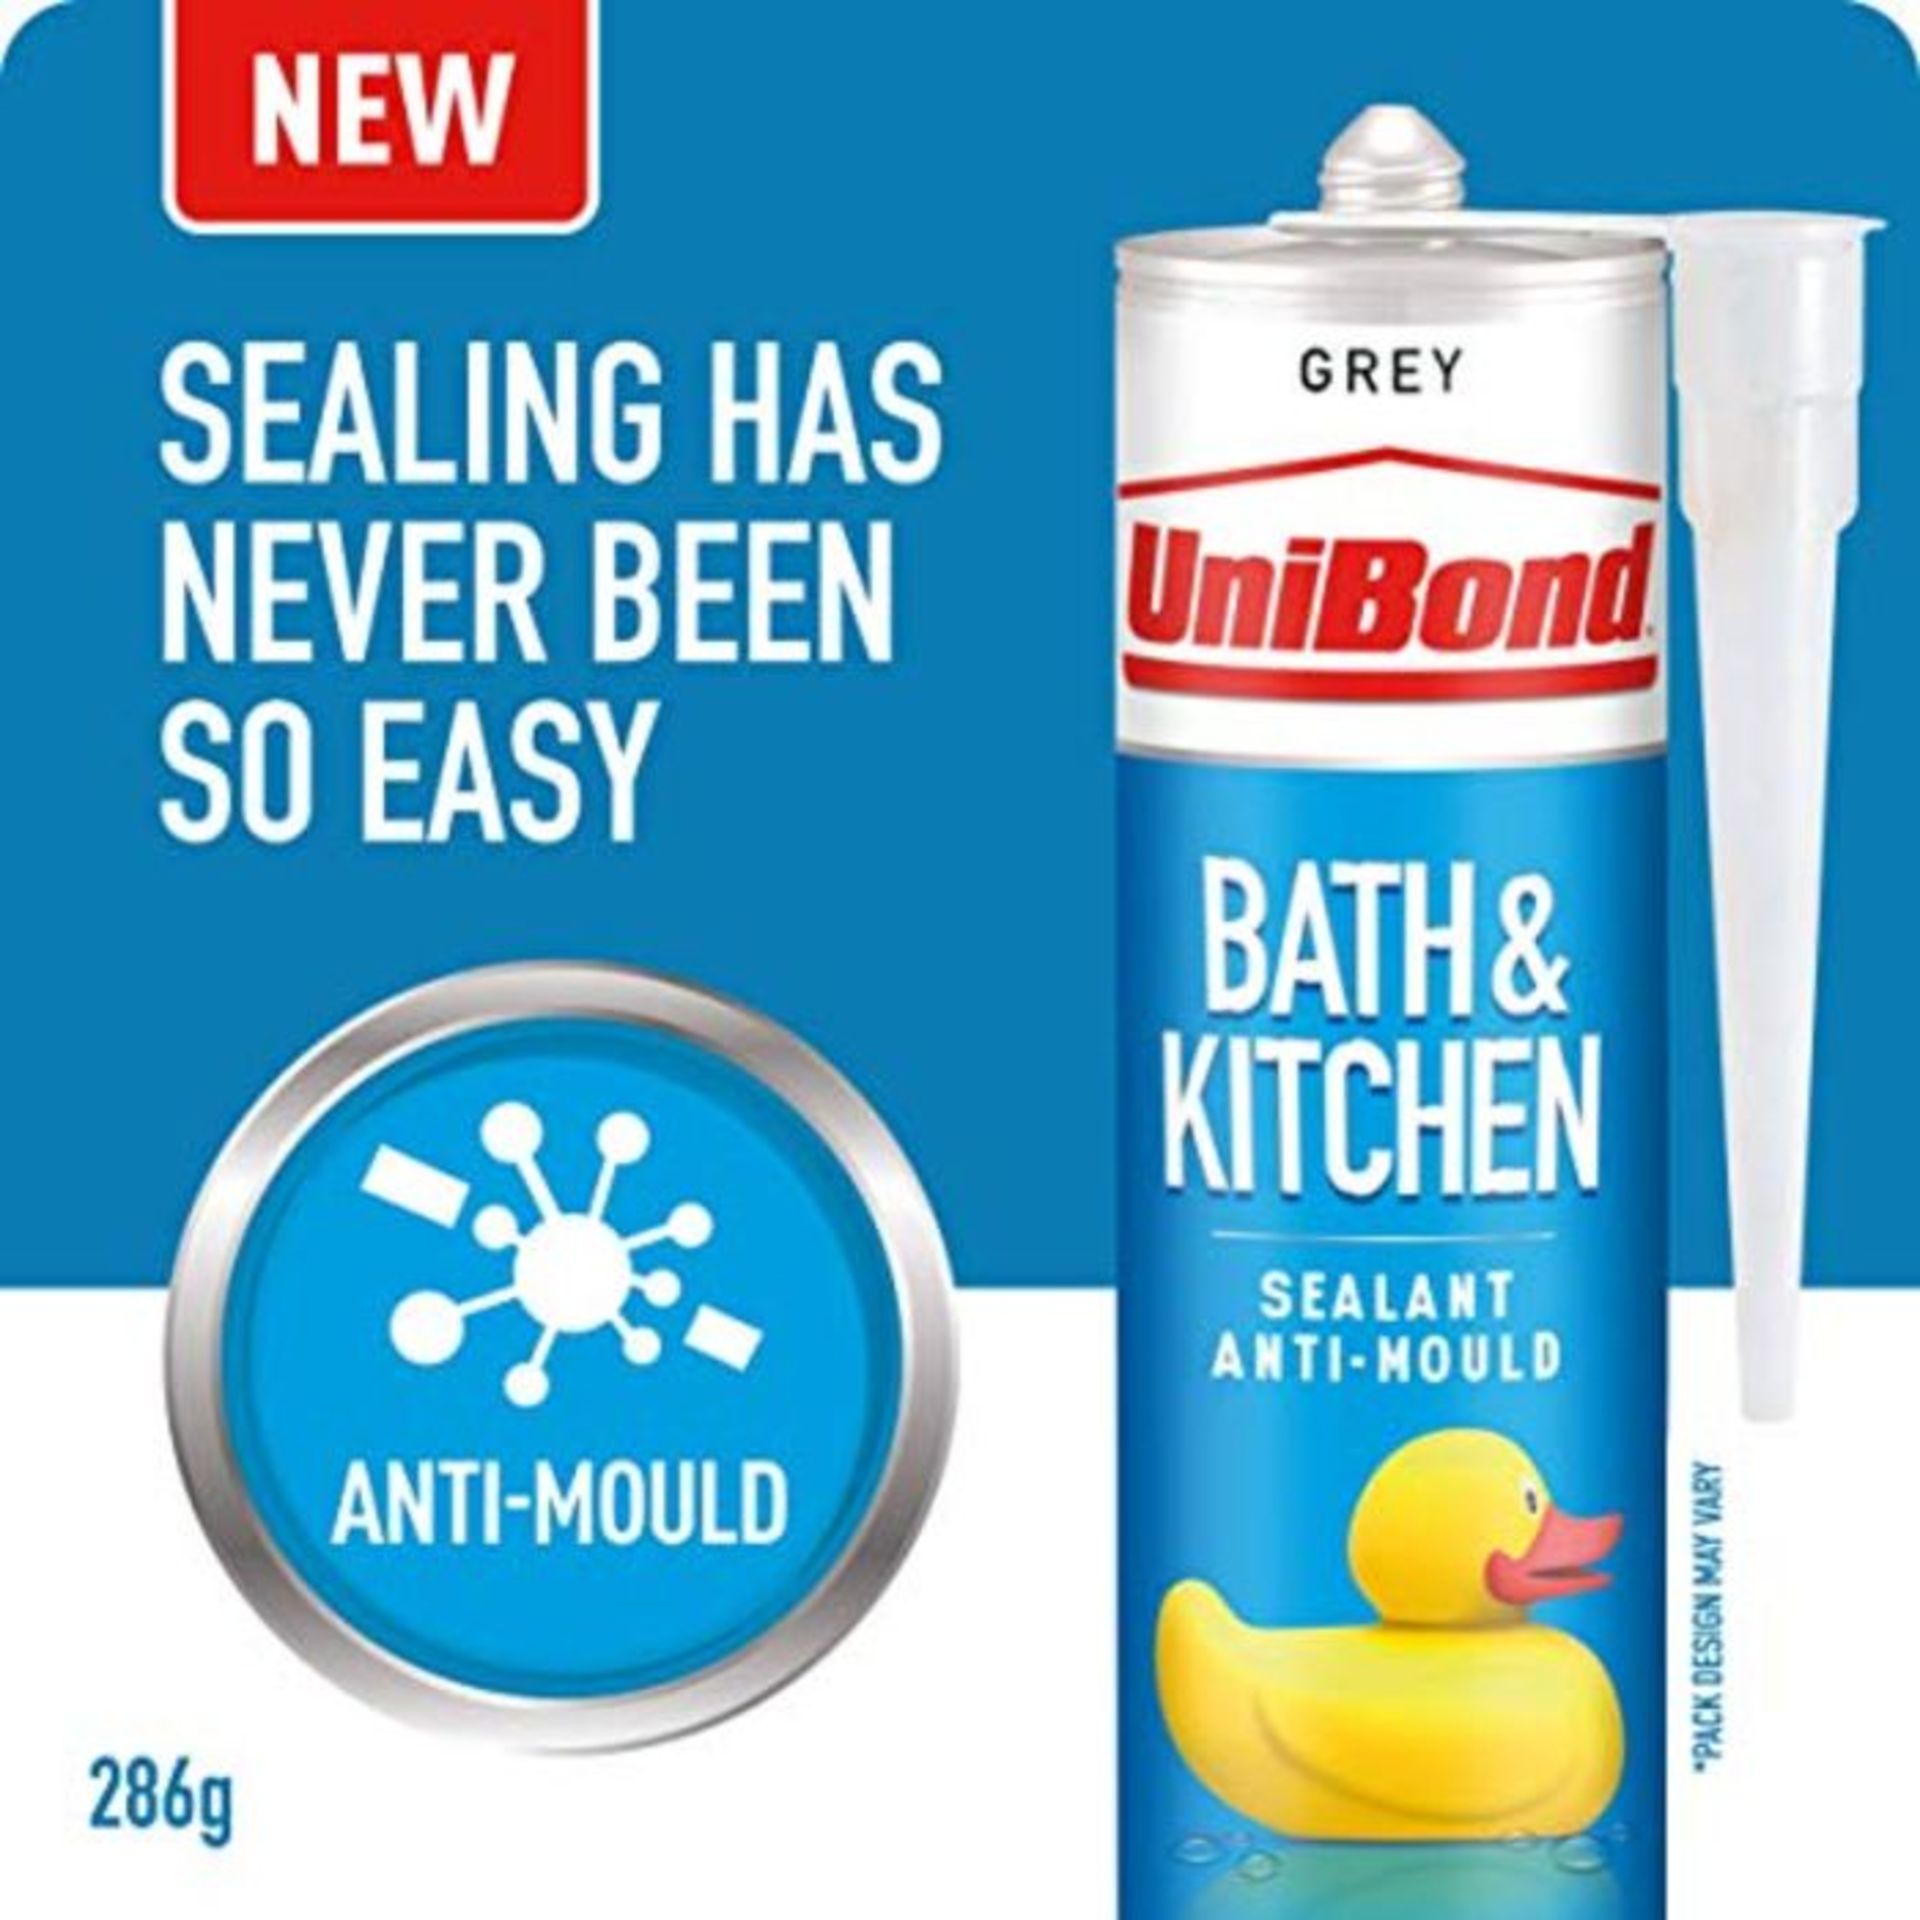 UniBond 2652144 Bath & Kitchen Sanitary sealant, Grey